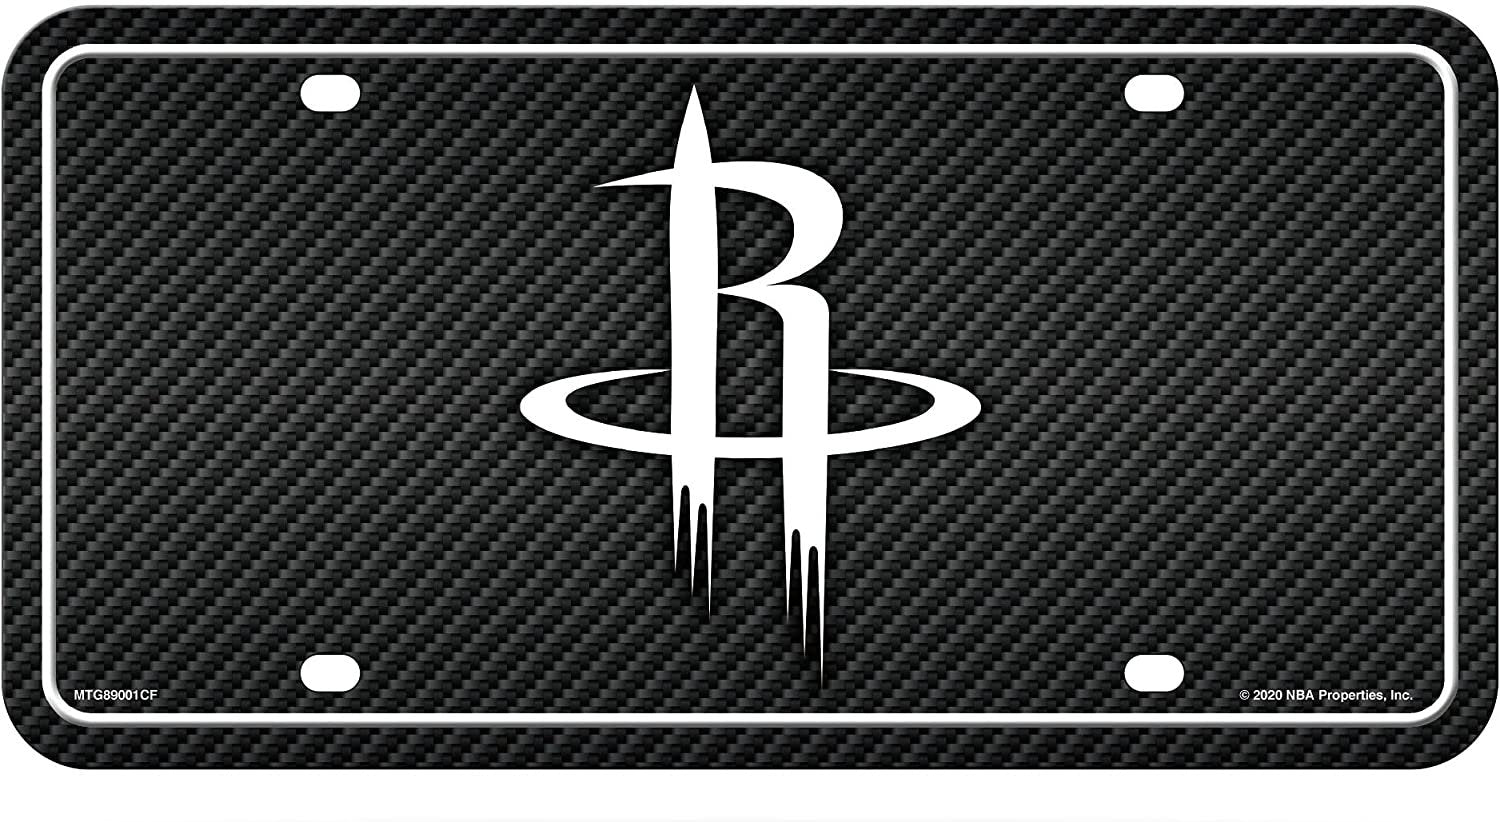 Houston Rockets Metal Auto Tag License Plate, Carbon Fiber Design, 6x12 Inch